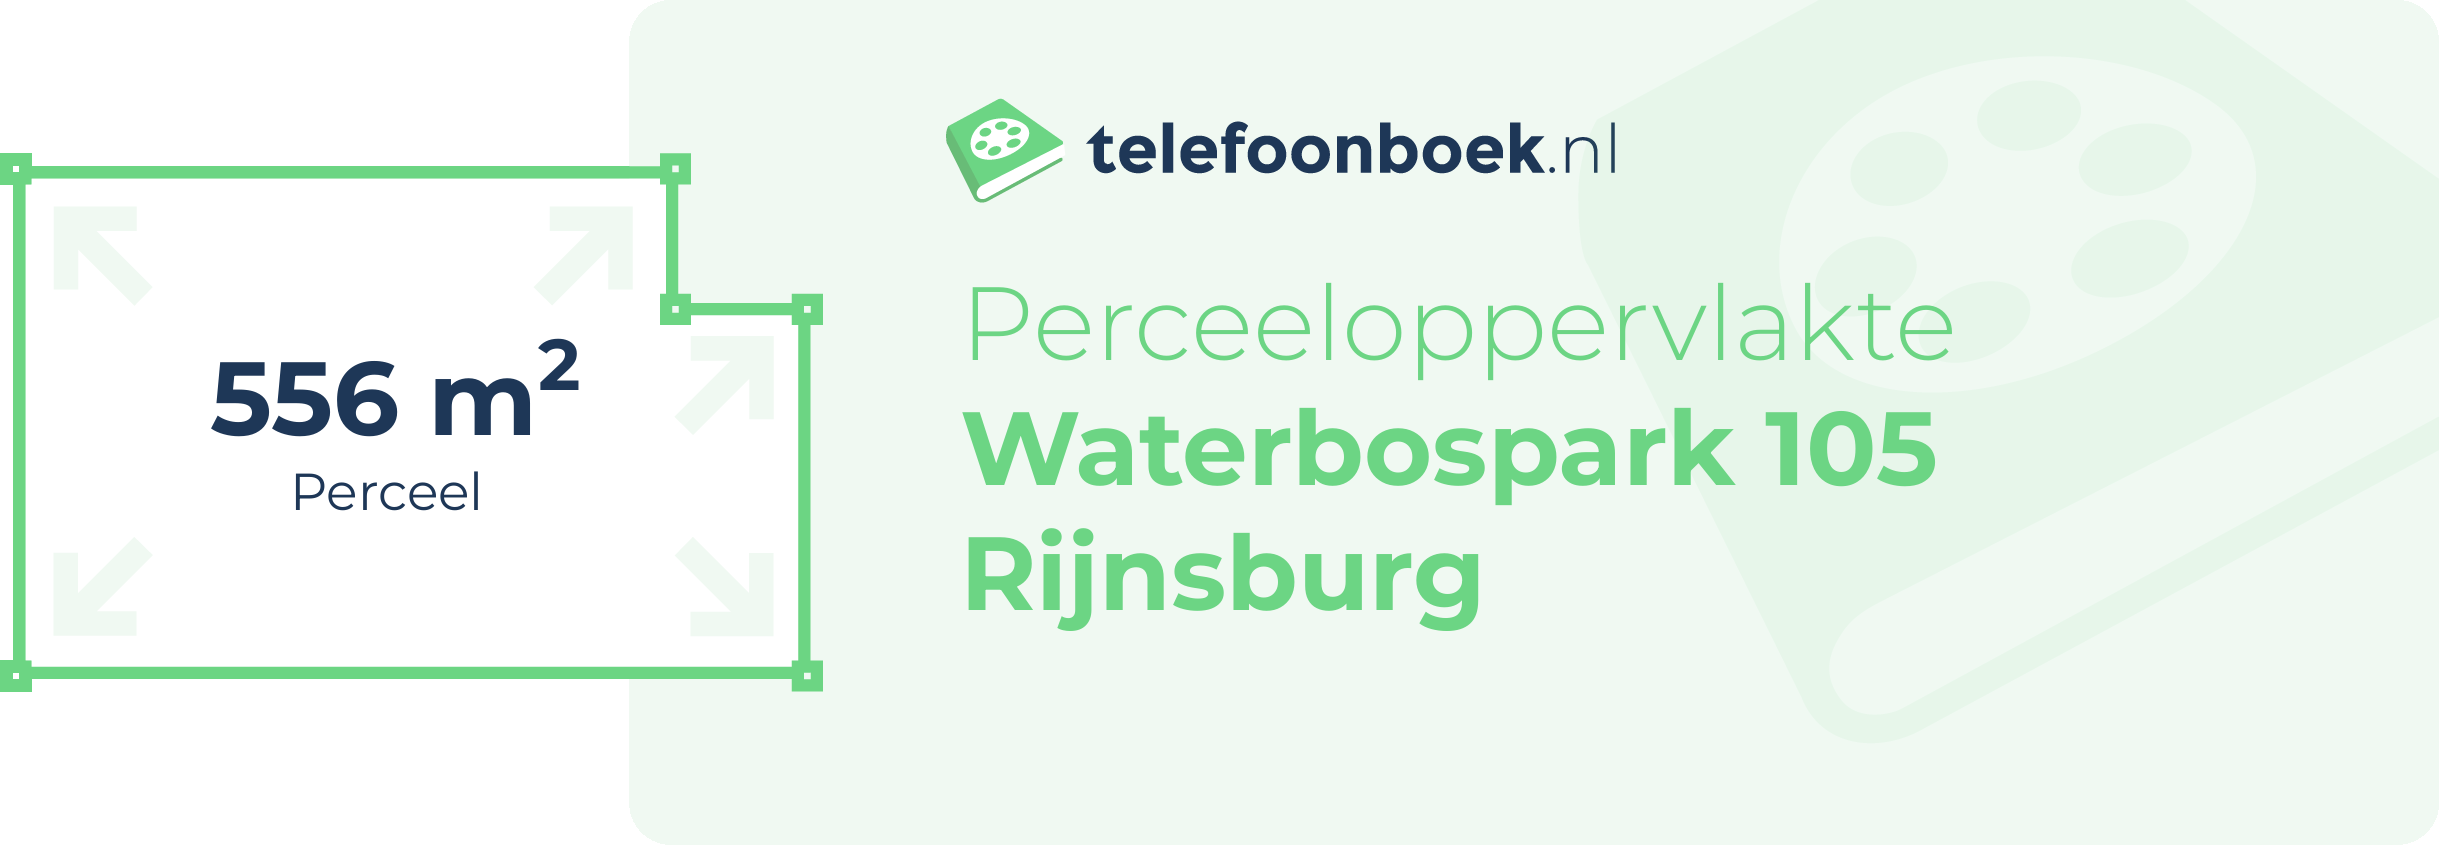 Perceeloppervlakte Waterbospark 105 Rijnsburg